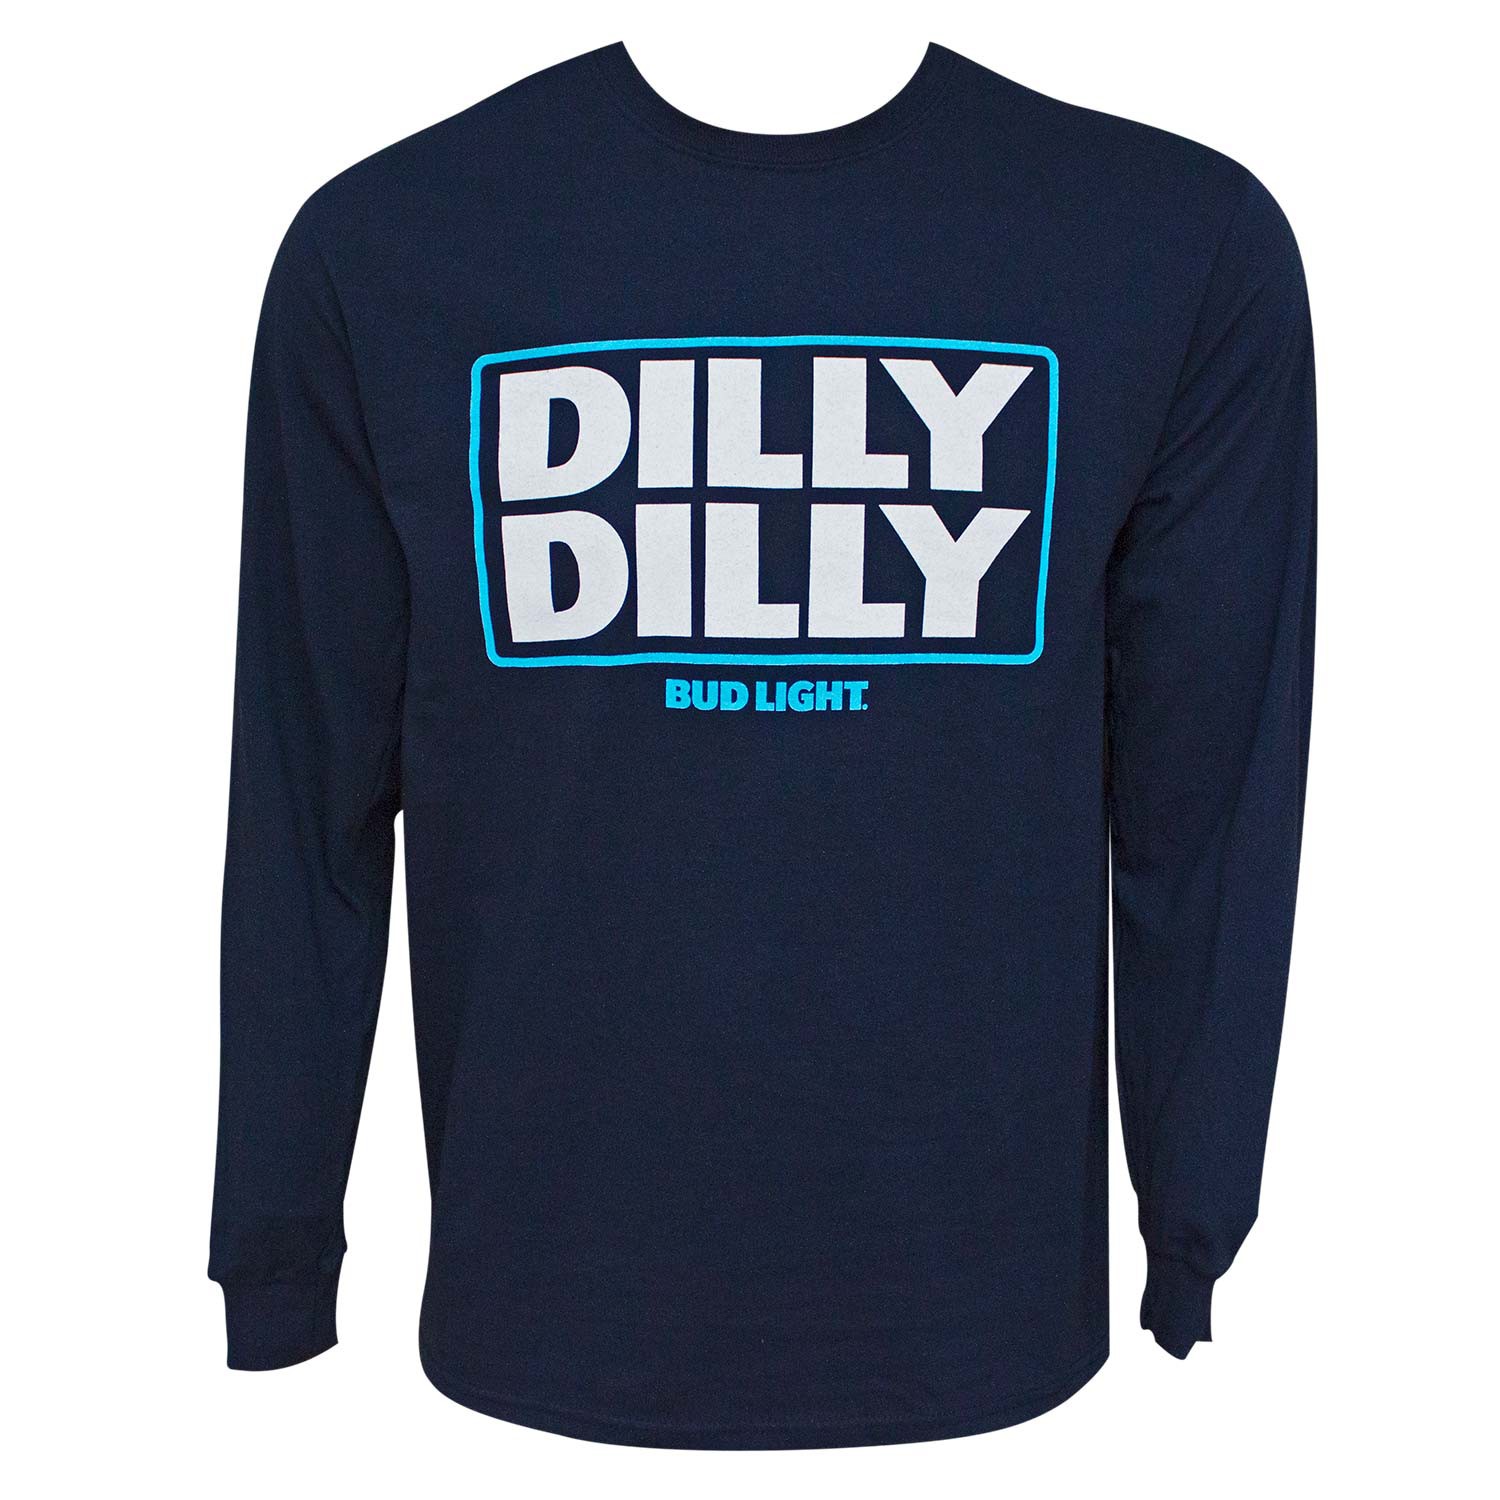 Bud Light Dilly Dilly Long Sleeve Navy Blue Tee Shirt